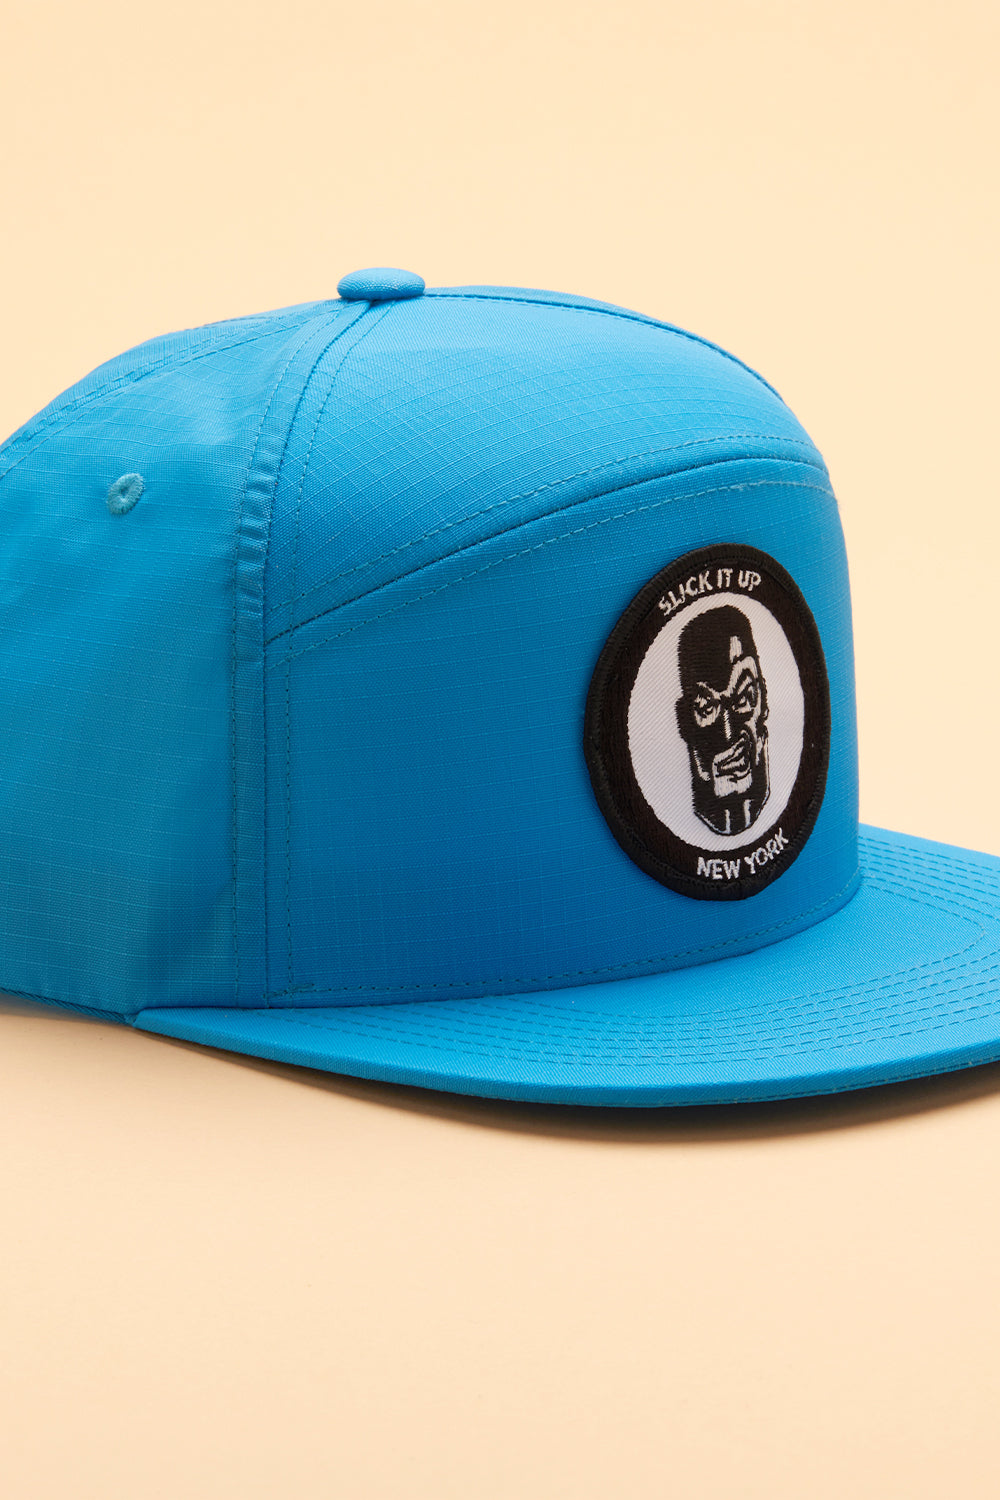 Neon Blue Logo Hat - Slick It Up 